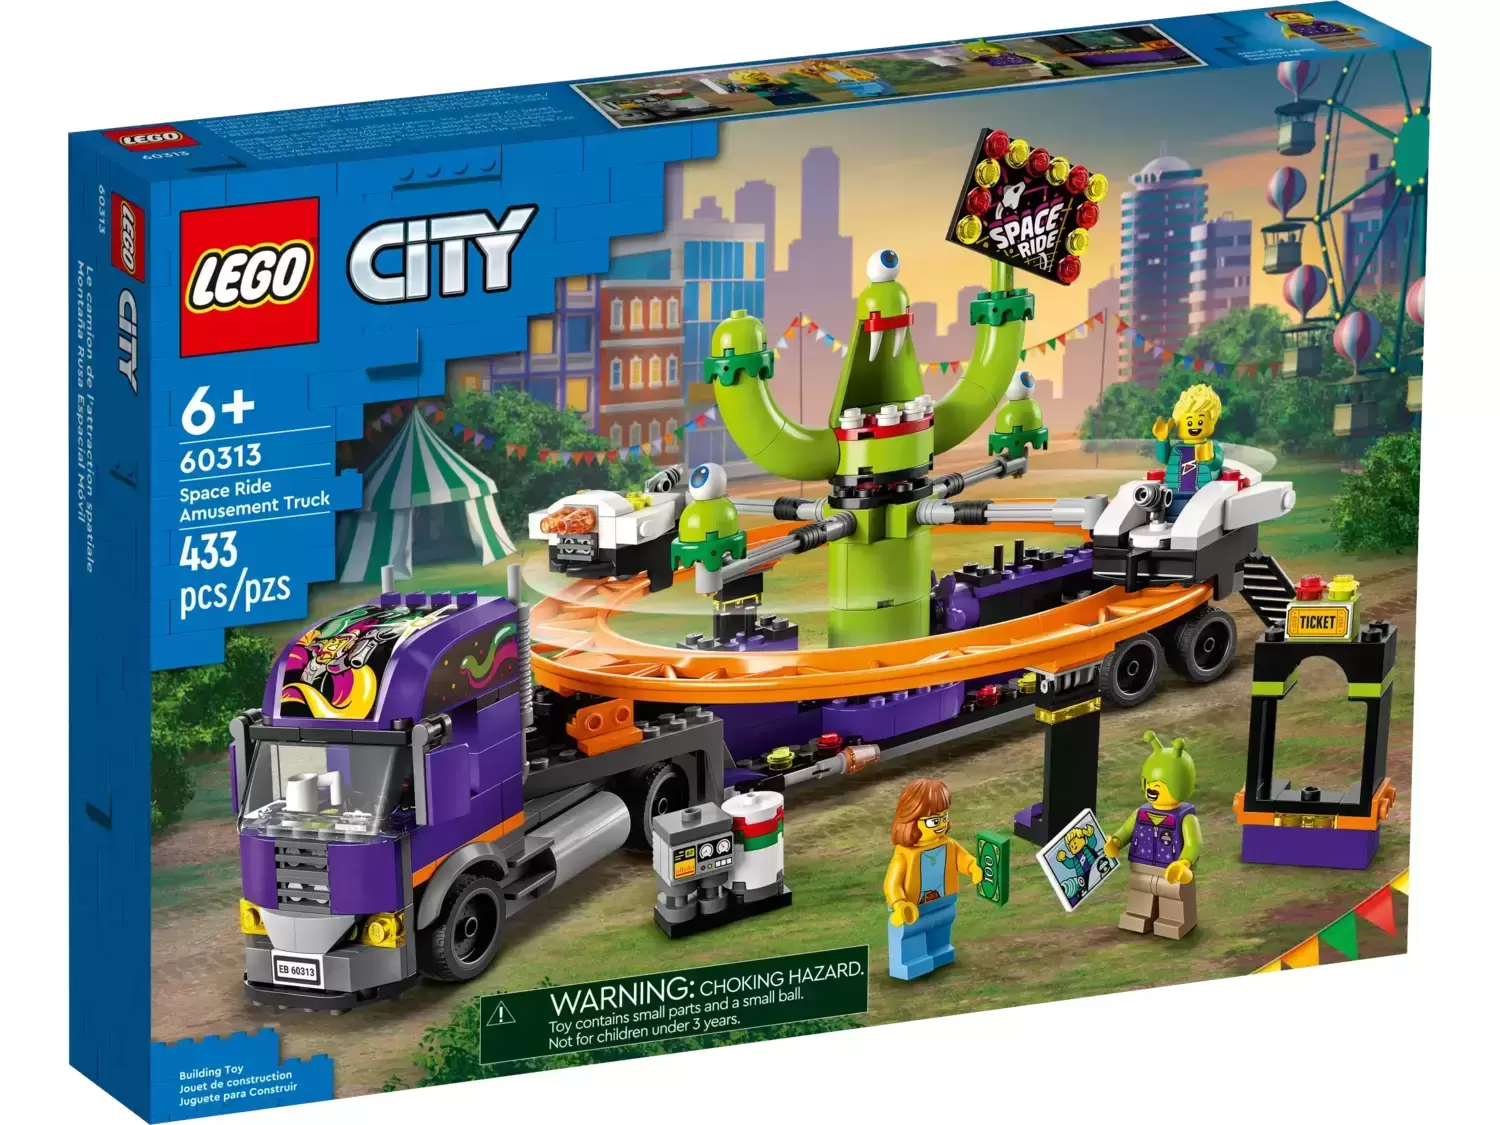 LEGO CITY - Space Ride Amusement Truck